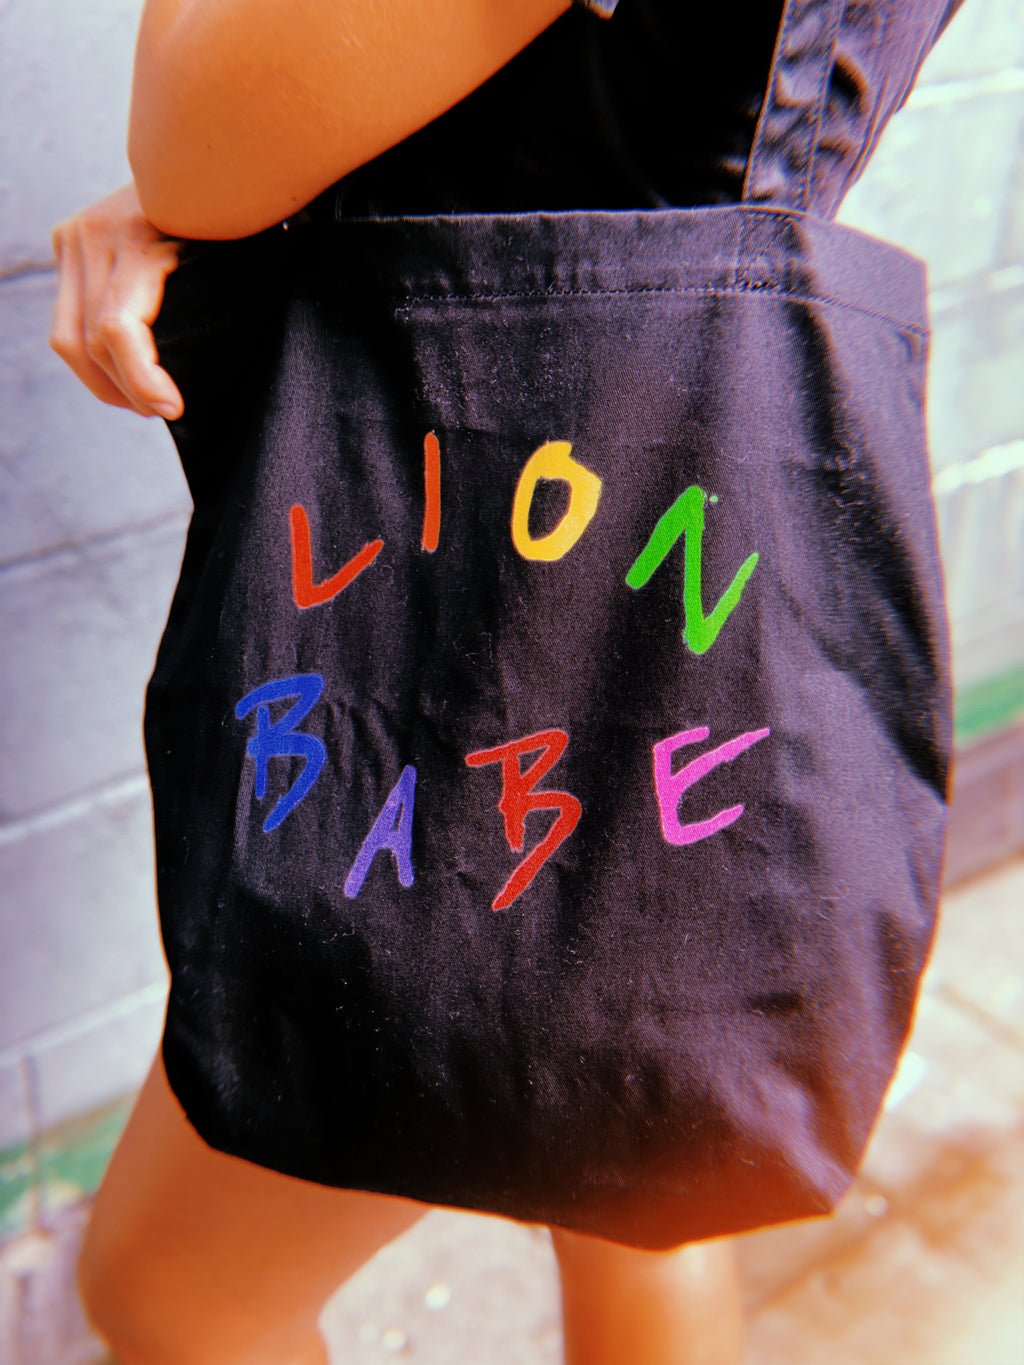 LION BABE RAINBOW Tote Bag